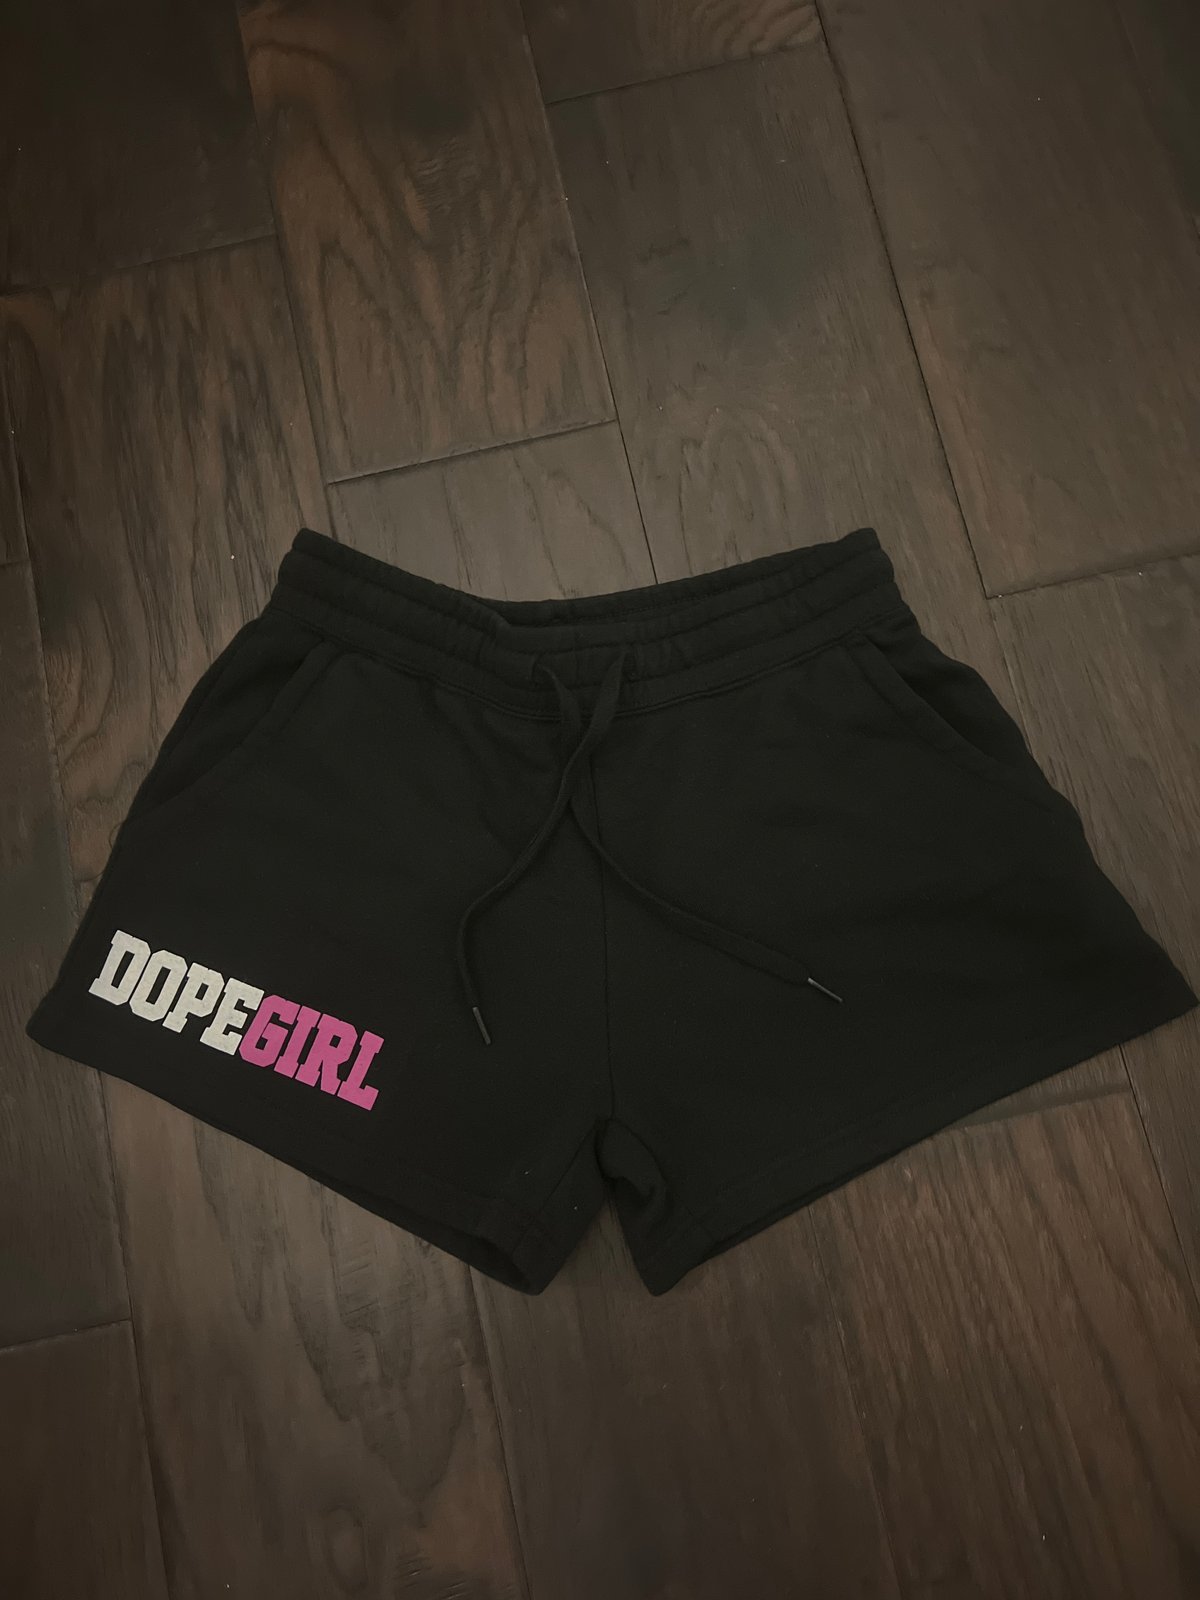 DopeGirl Shorts